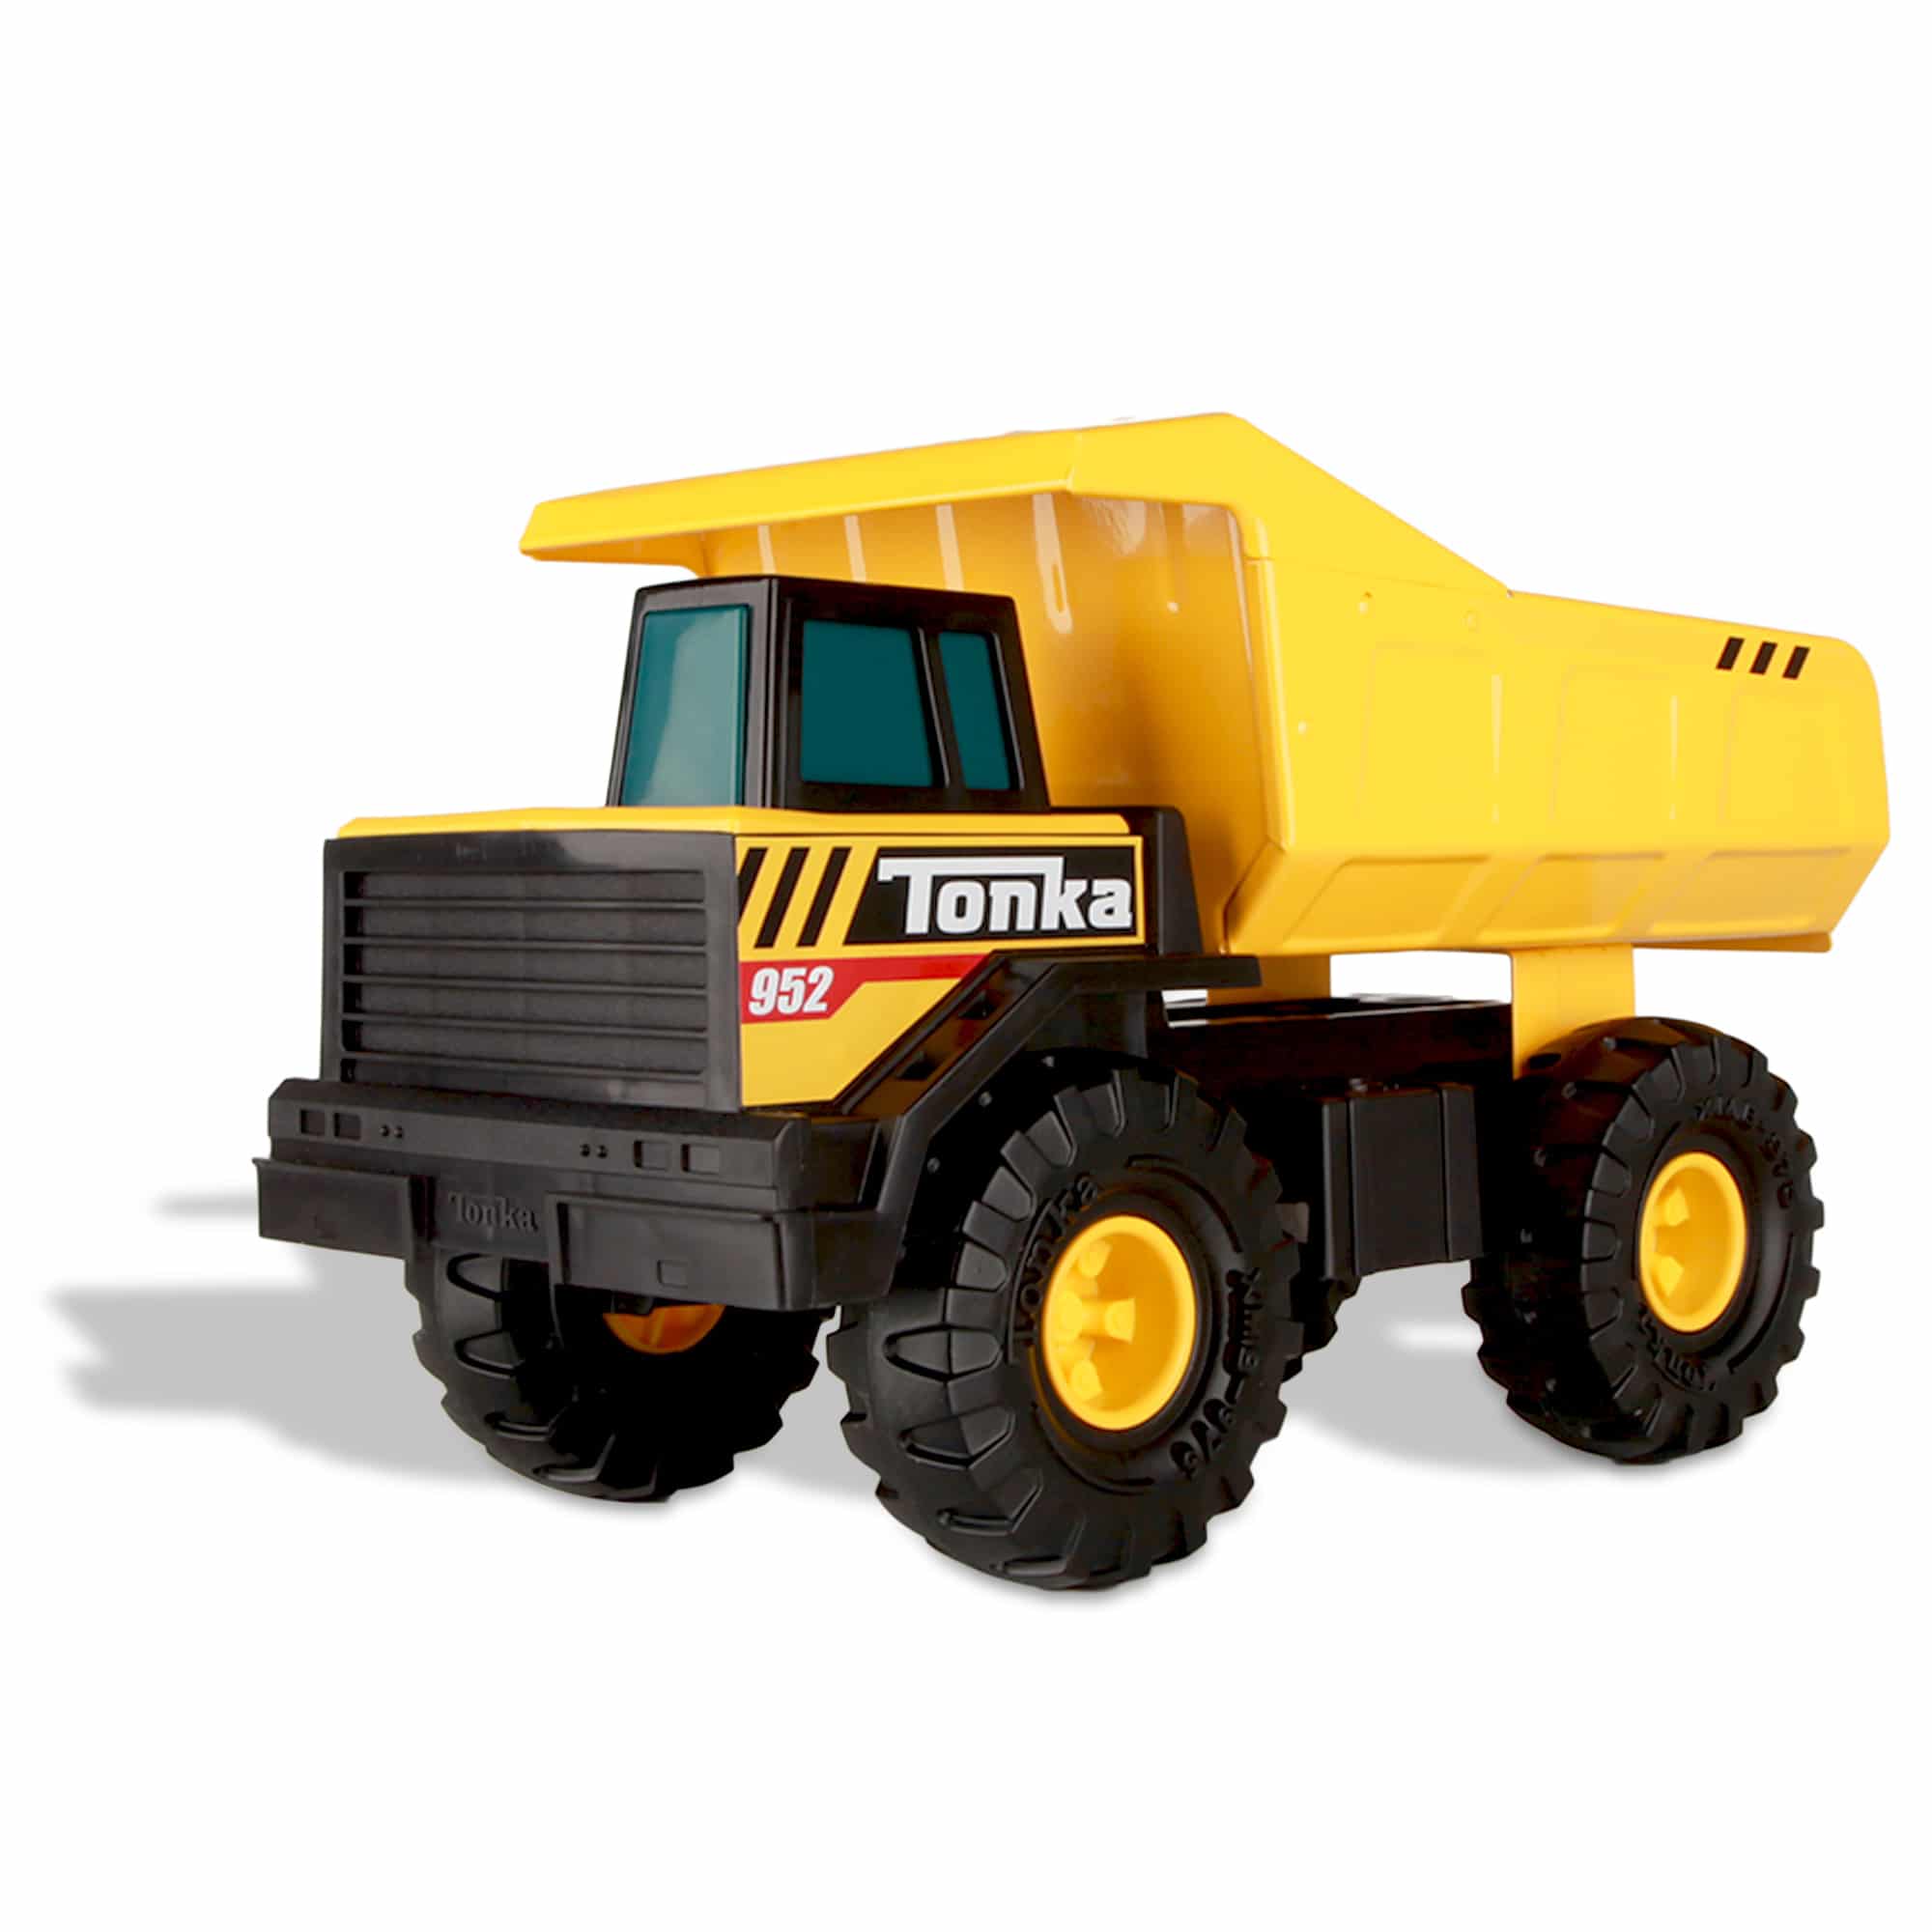 Tonka Mighty Dump Truck - 17"-SCHYLLING-Little Giant Kidz